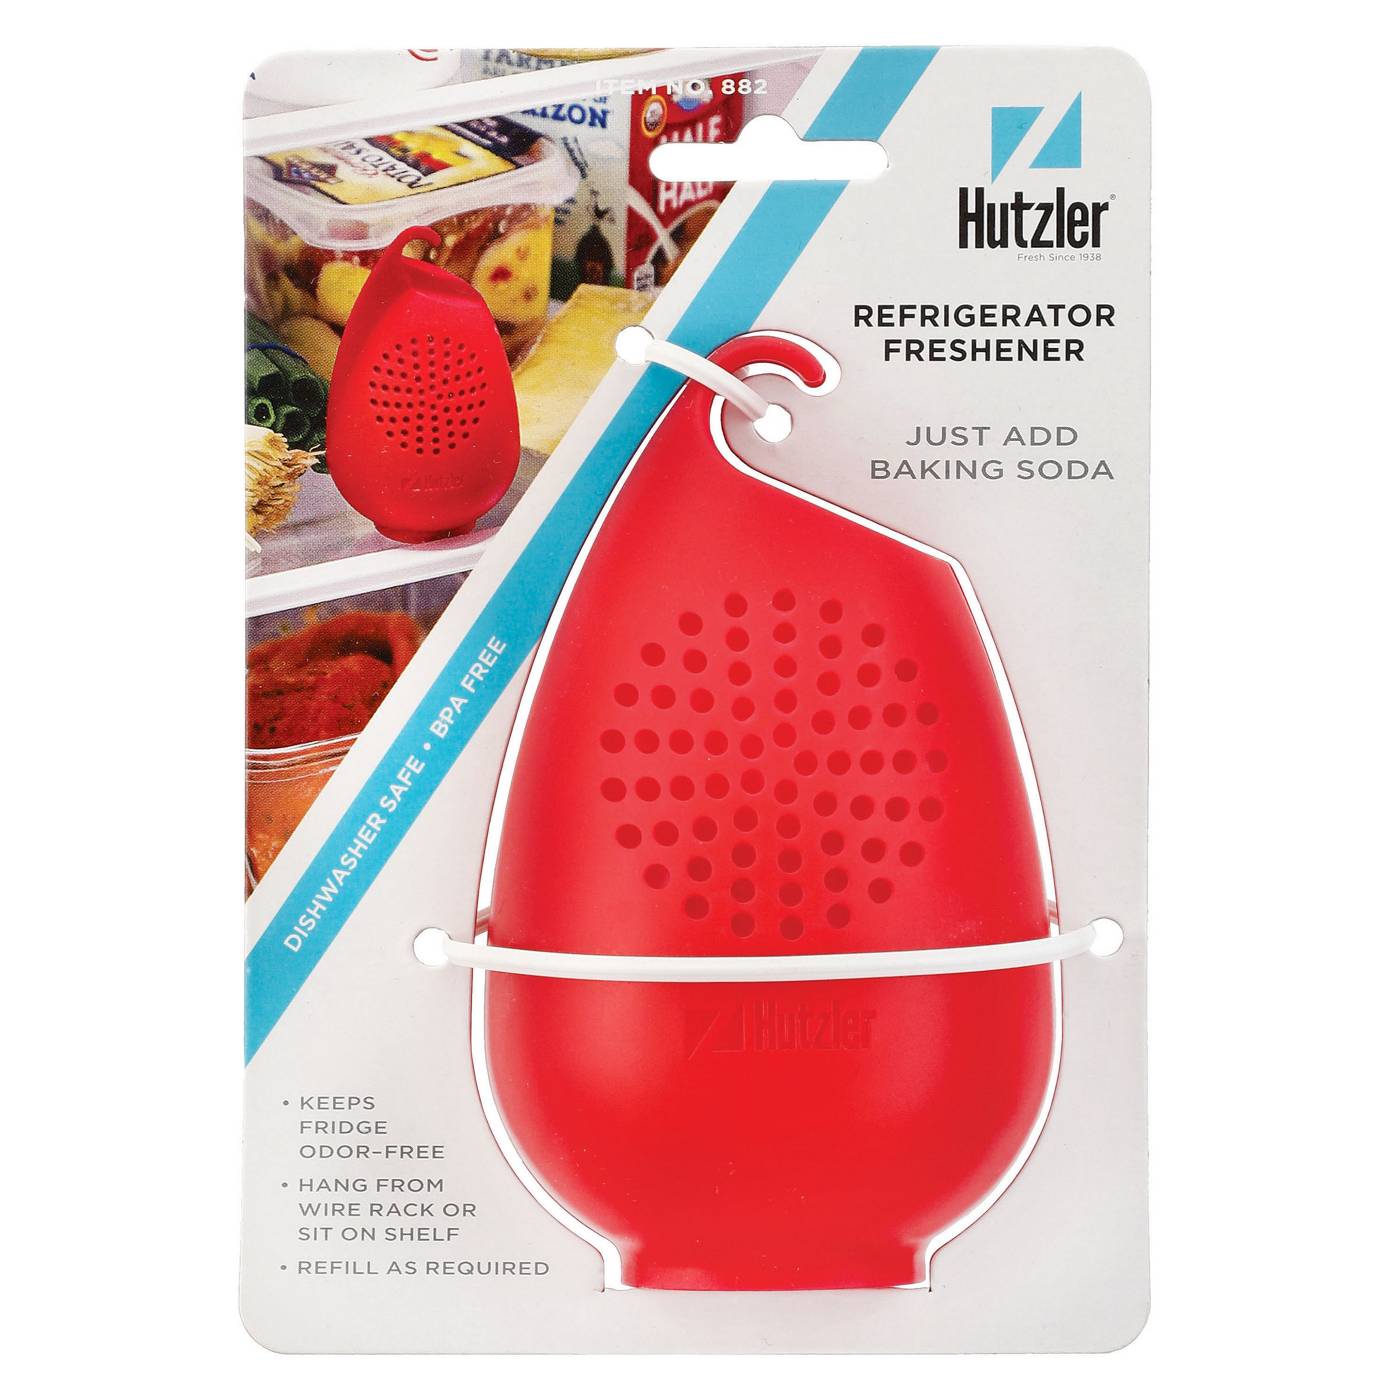 Hutzler Red Refrigerator Freshener; image 2 of 2